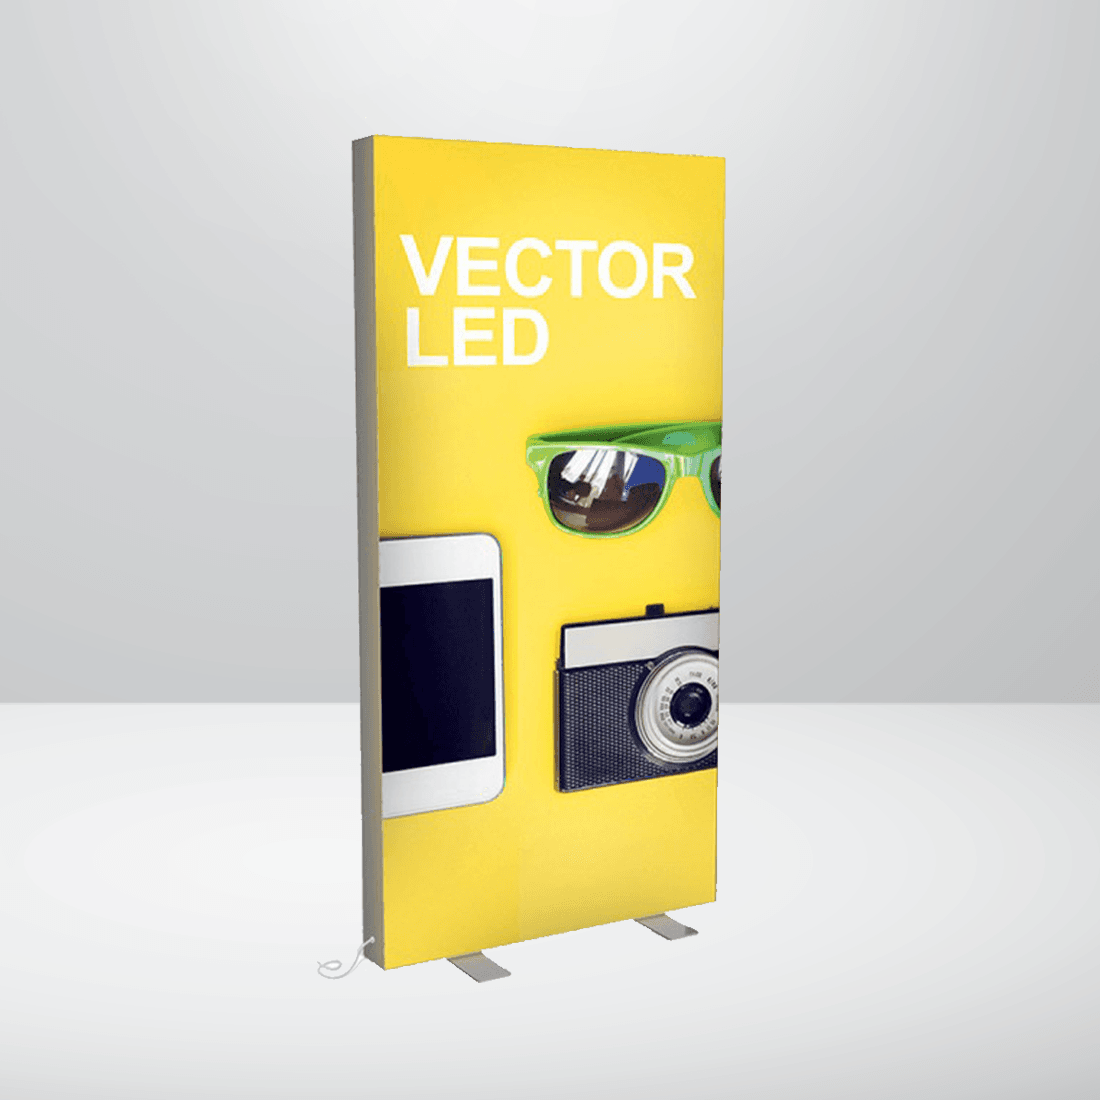 VECTOR LED 75 mm: 1000x2000x75 mm / VLB 75